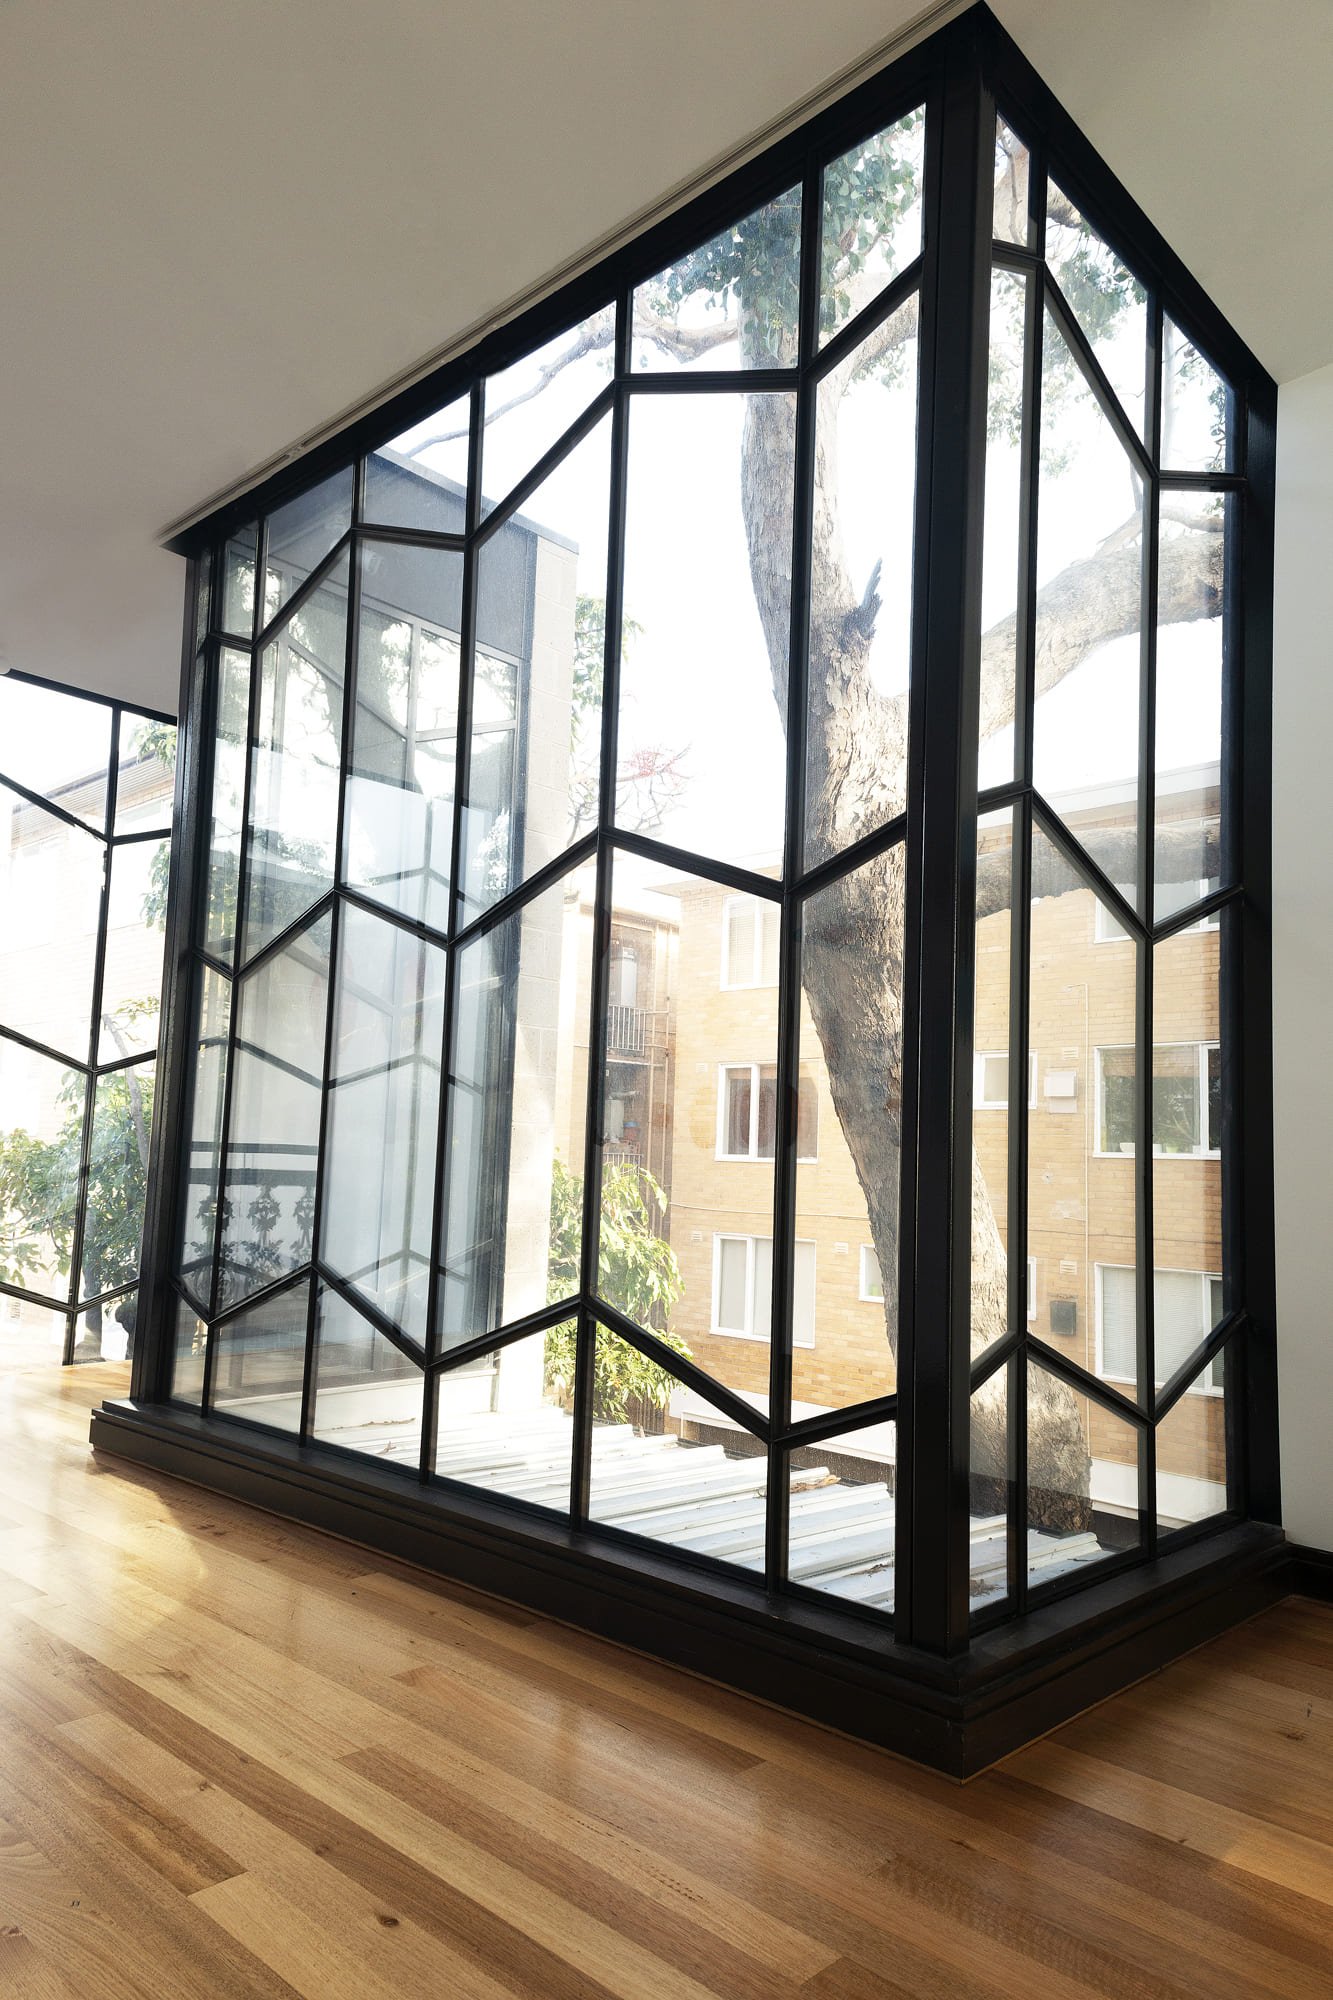 Linden New Art Gallery Steel Windows Intricate Bar Work Design